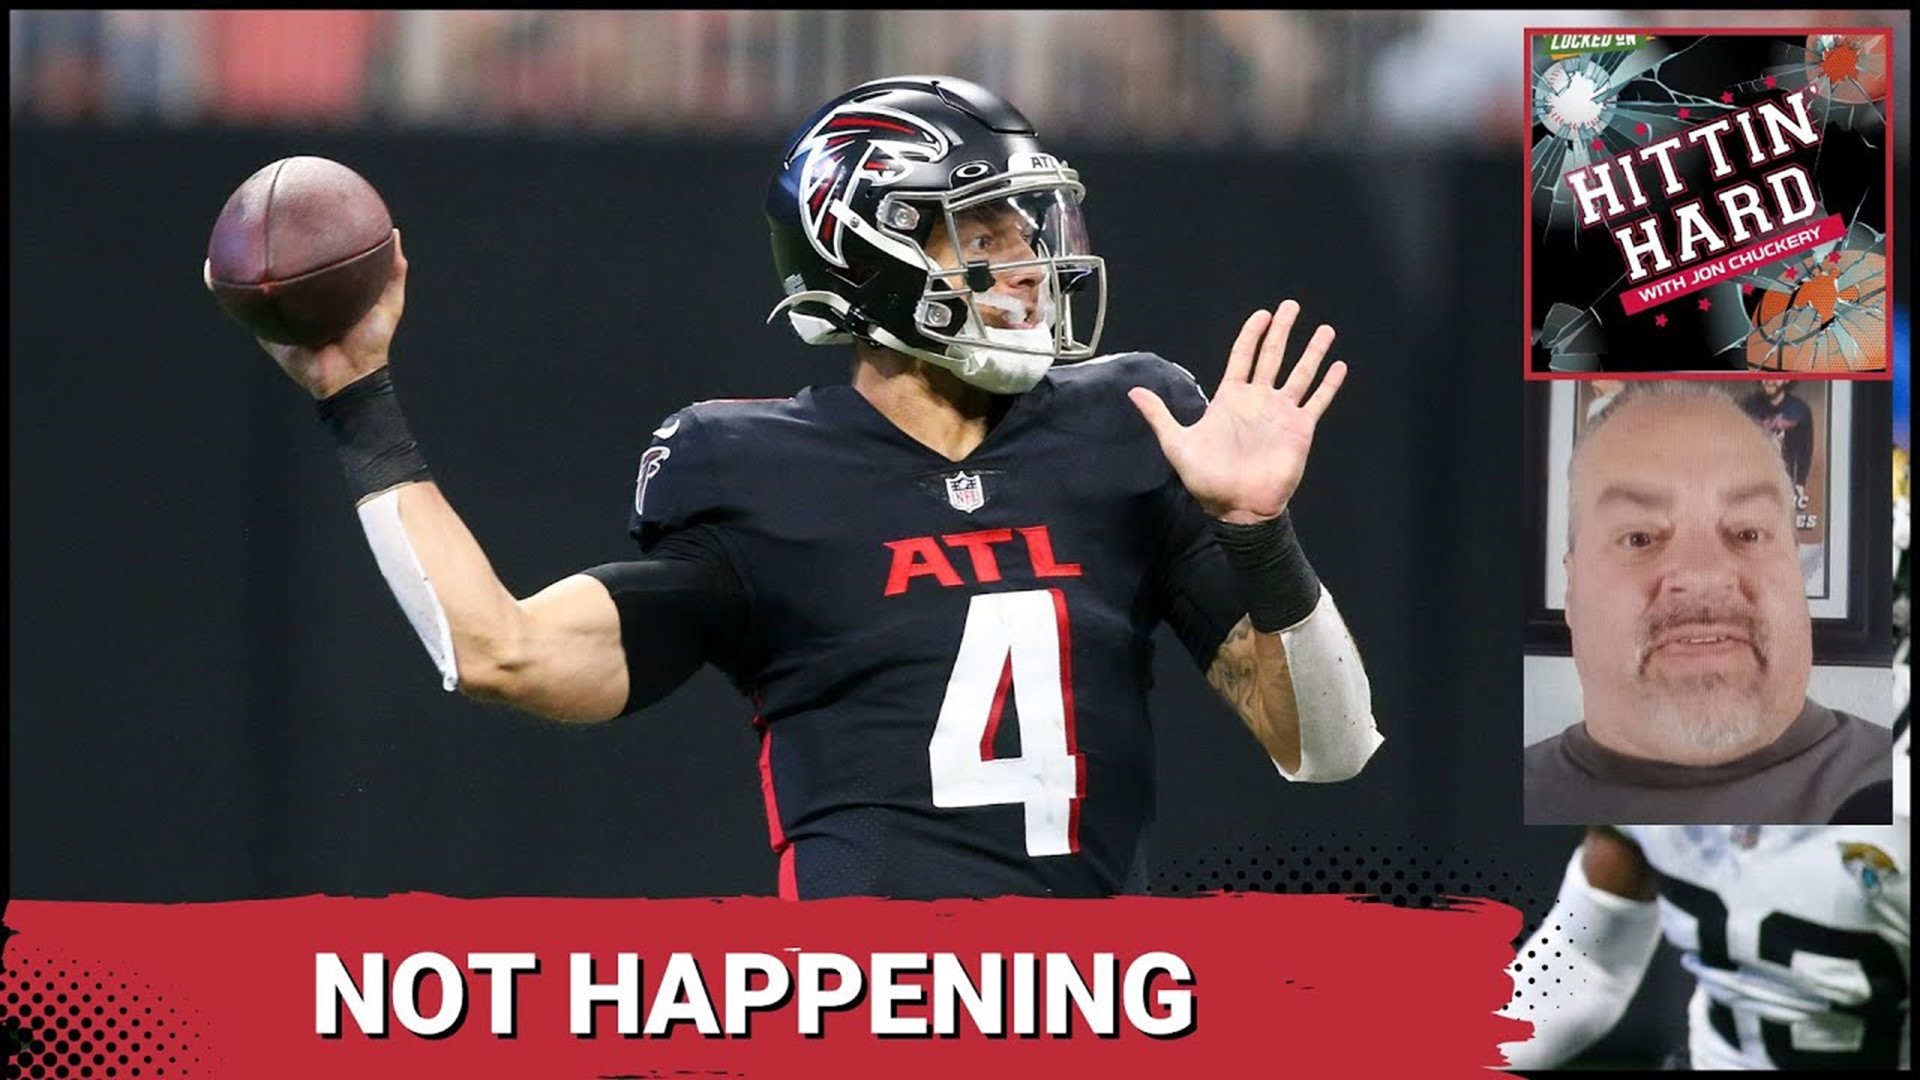 All You Need To Know About the Atlanta Falcons' Debacle |Hittin Hard With Jon Chuckery